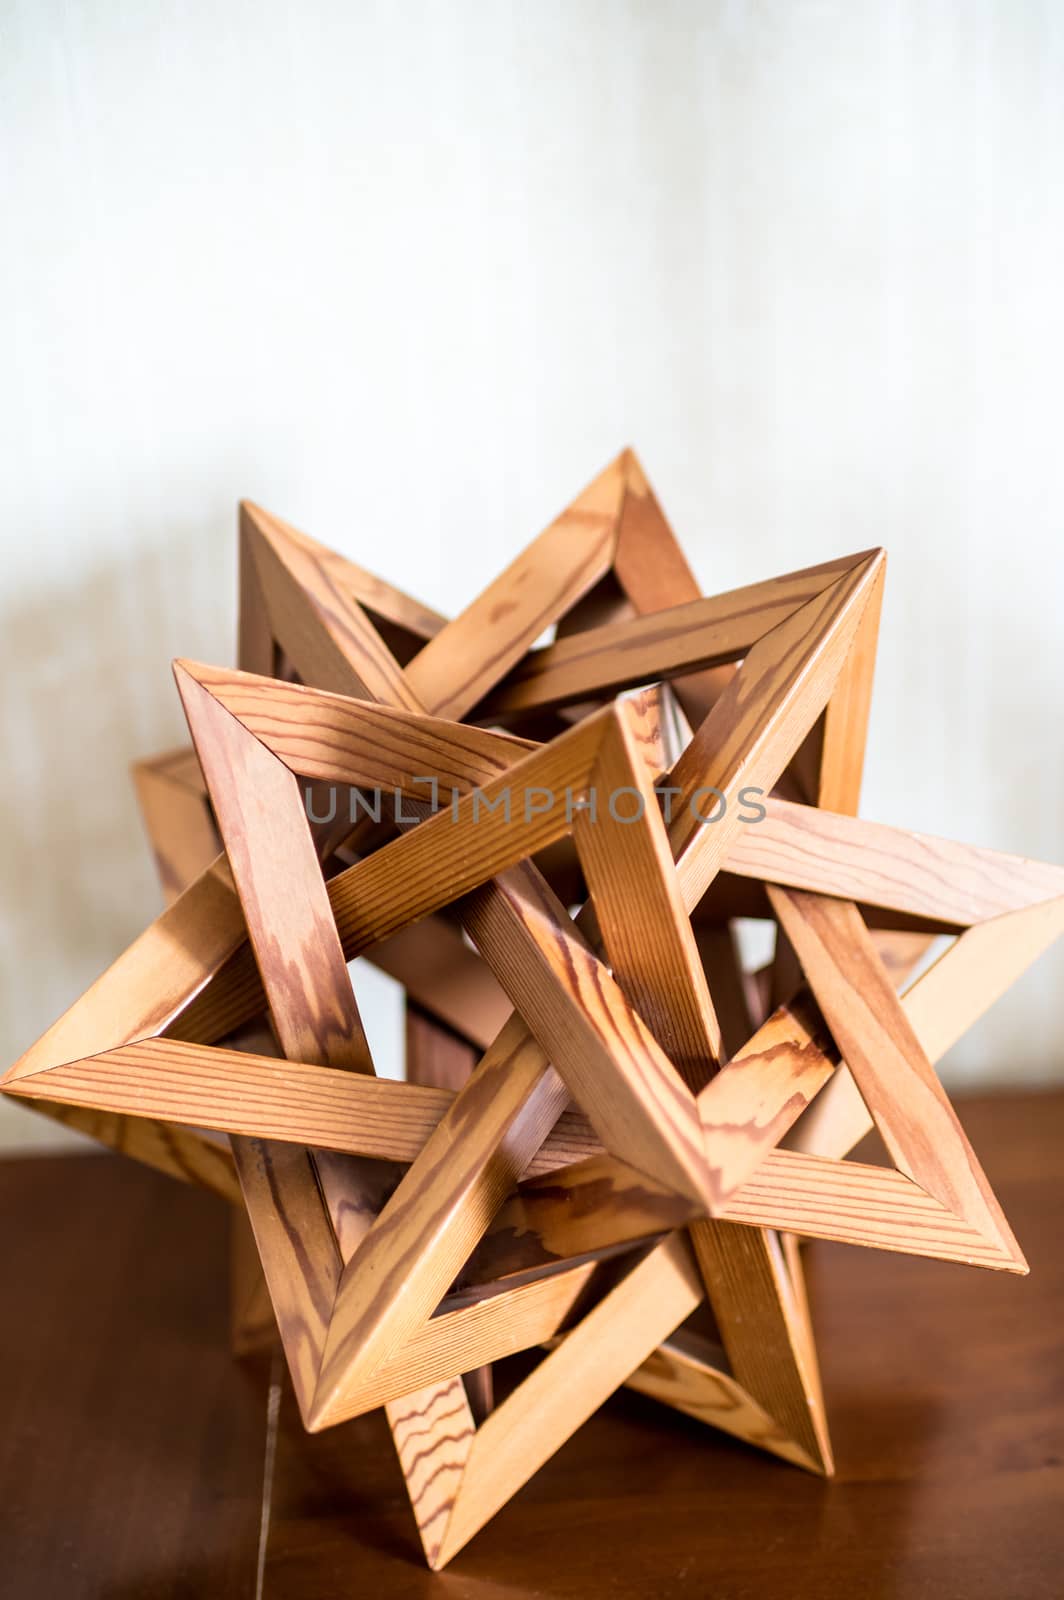 wooden abstraction of triangles by okskukuruza